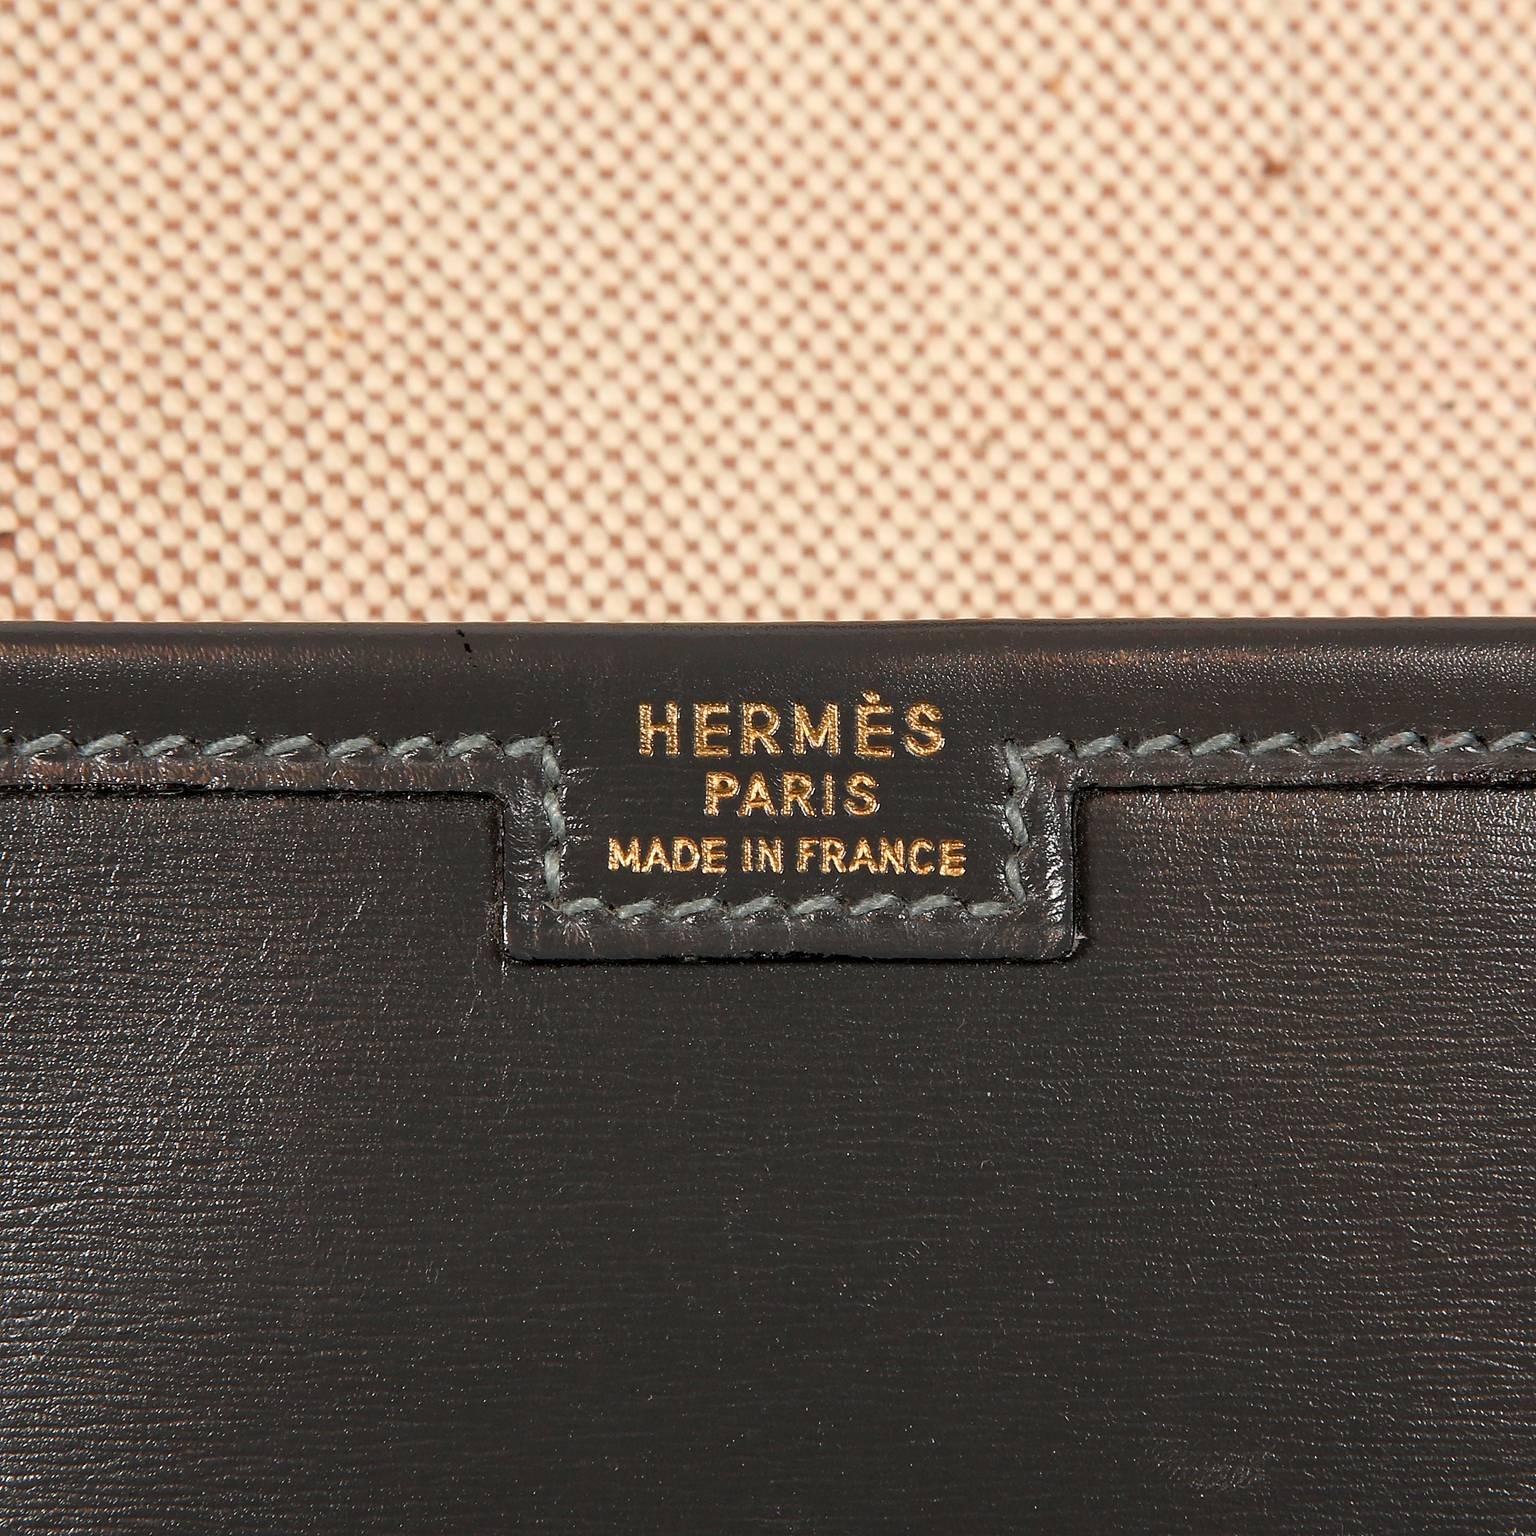  Hermès Grey and Bordeaux Leather Jige Clutch 9